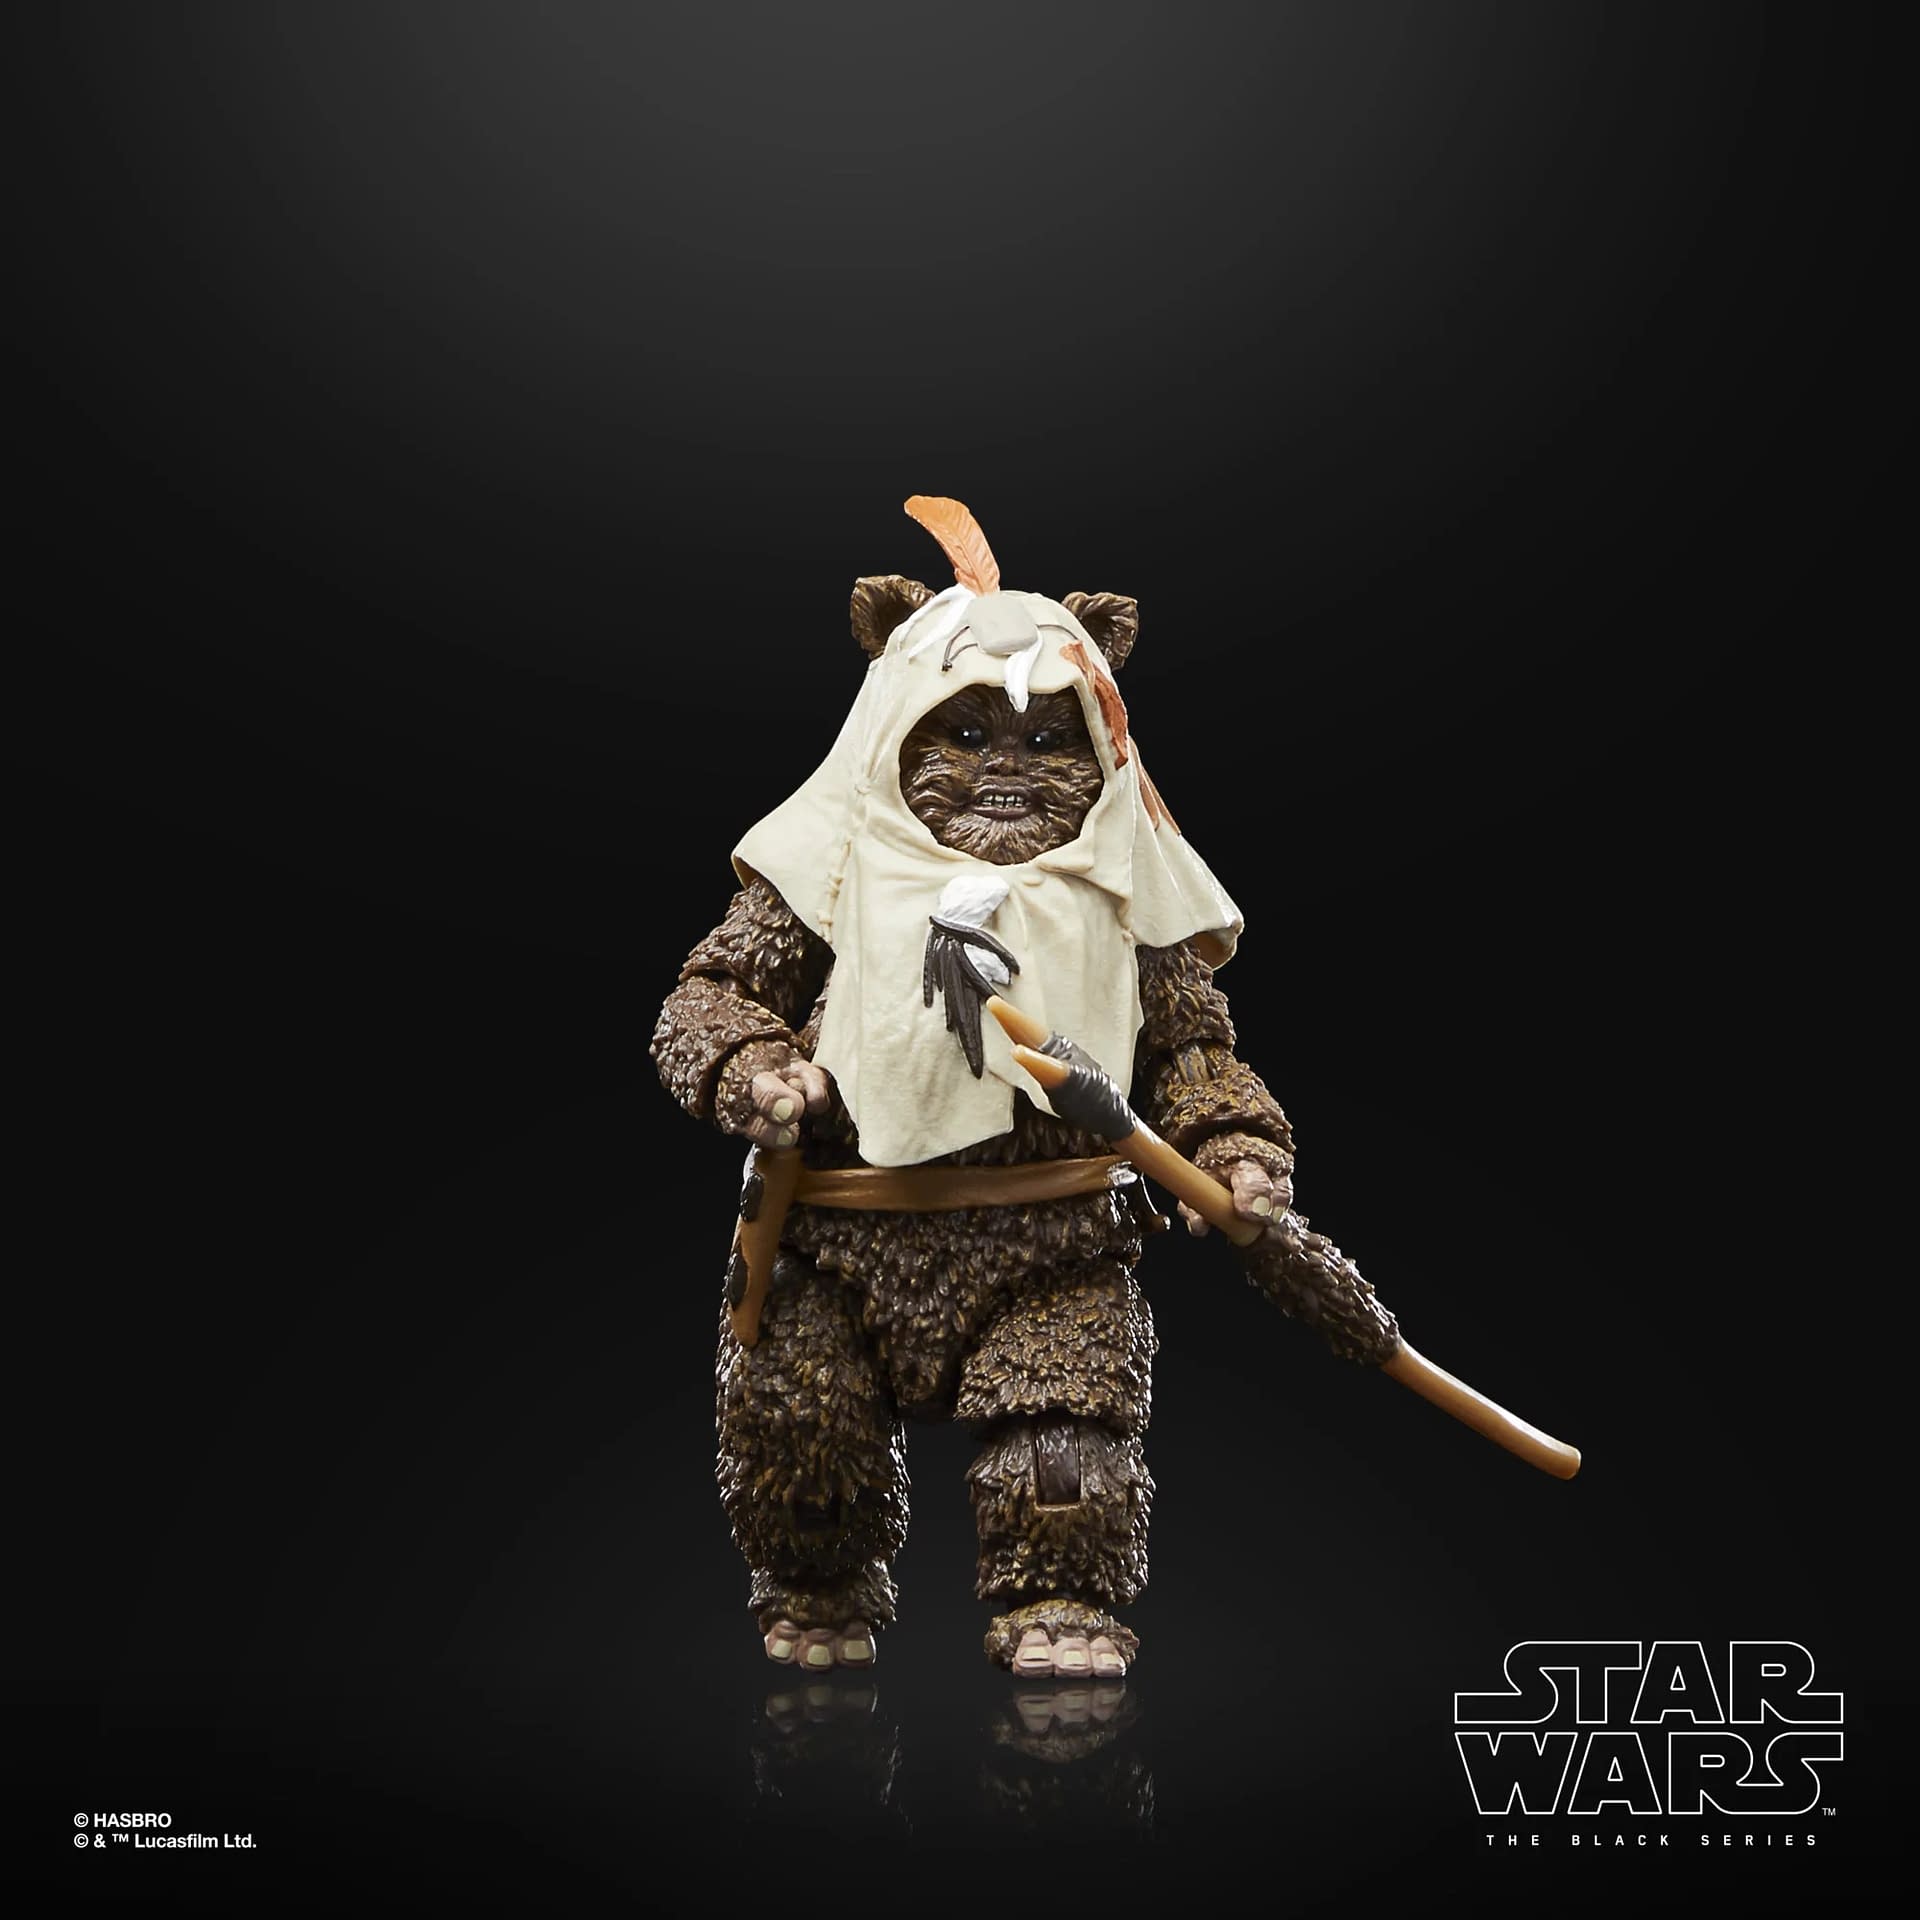 Star Wars Ewok Paploo Return to Hasbro for ROTJ 40th Anniversary 